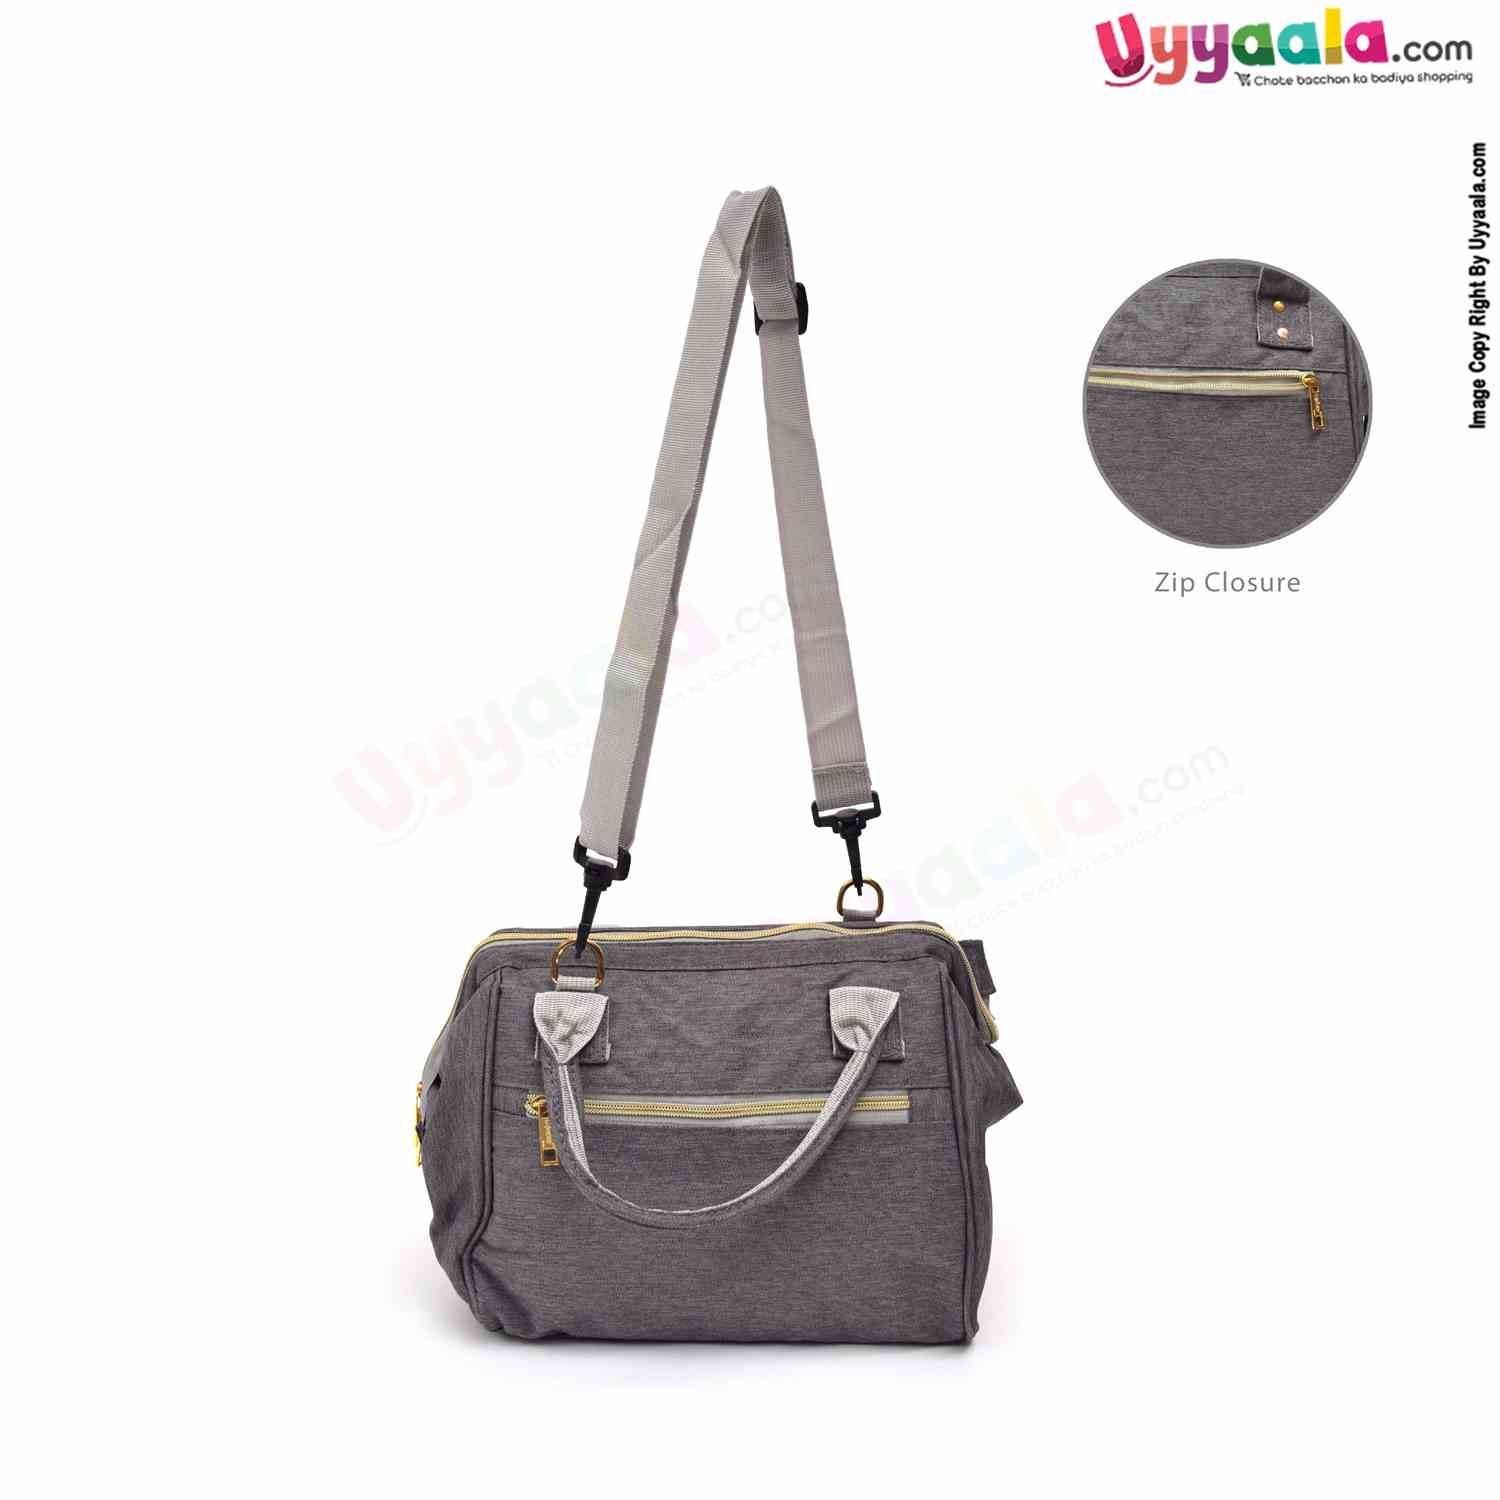 GANEN BABY Premium Quality Multipurpose Mother Bag(Diaper Bag), Size(32*28) - Grey